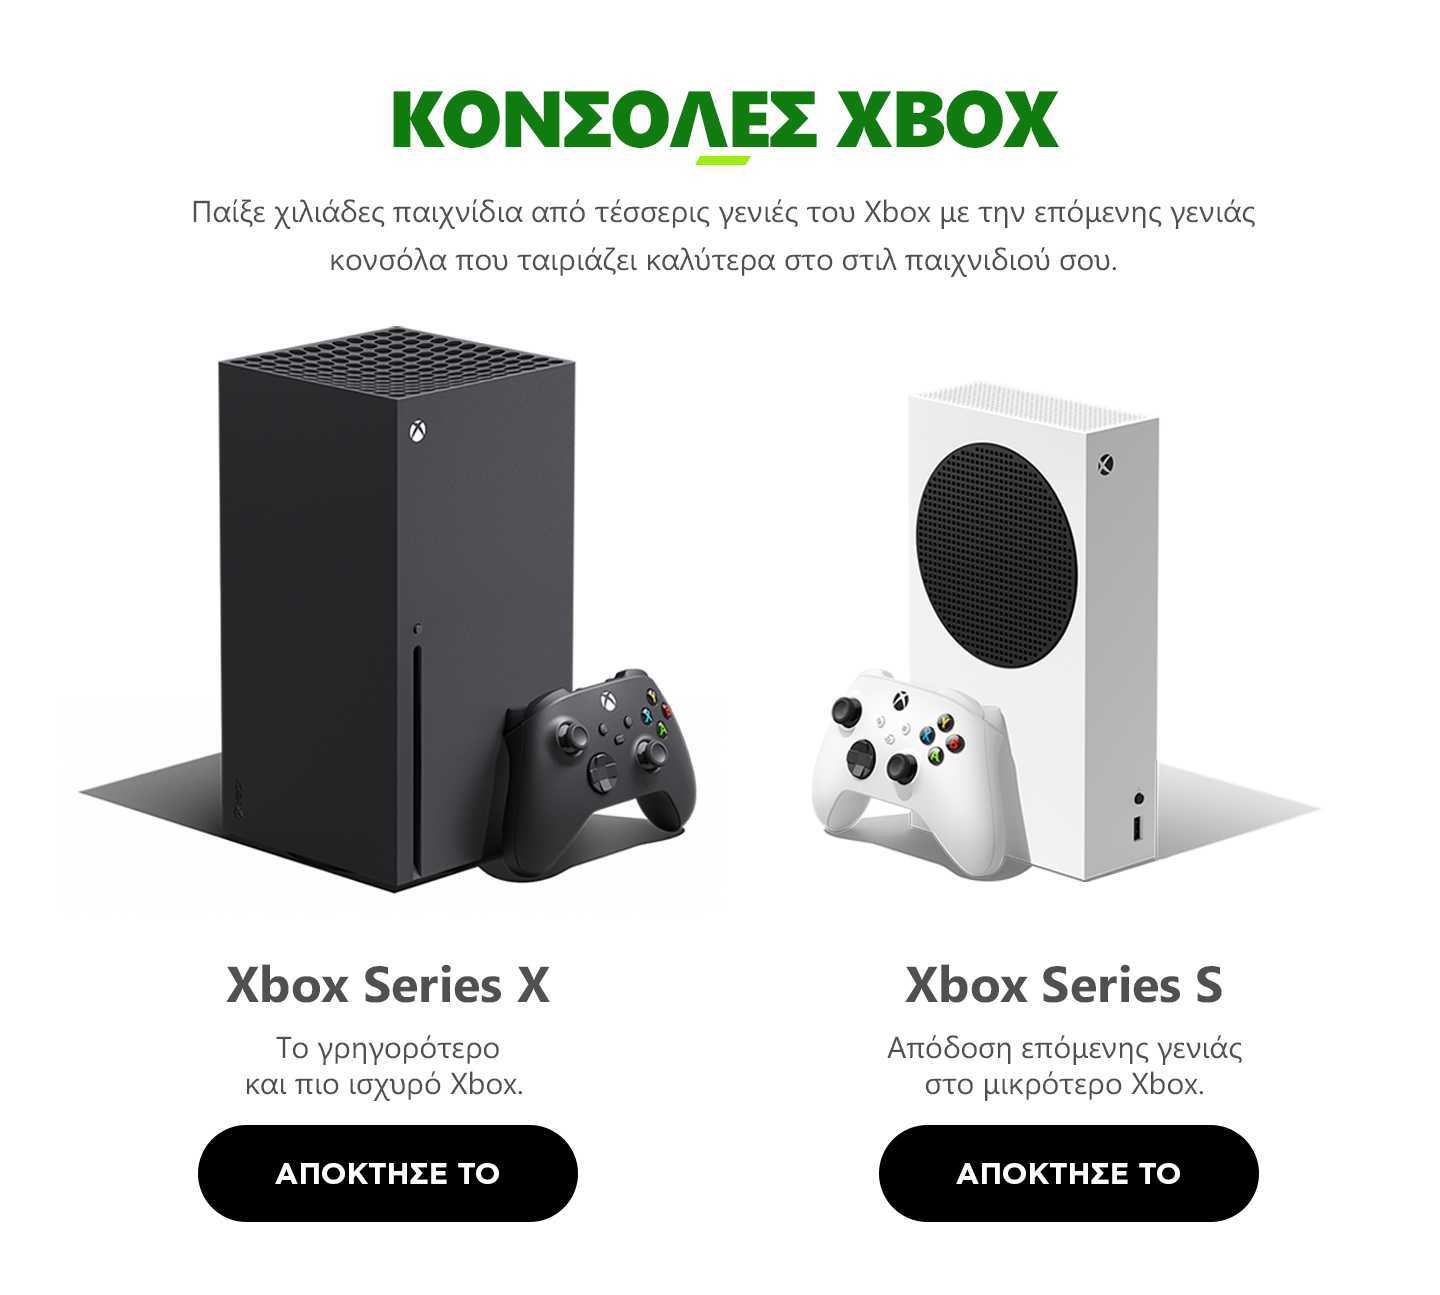 Xbox series x дата выхода в россии. Xbox one x габариты. Xbox Series x габариты коробки. Xbox 360 Series x. Xbox Series s габариты.